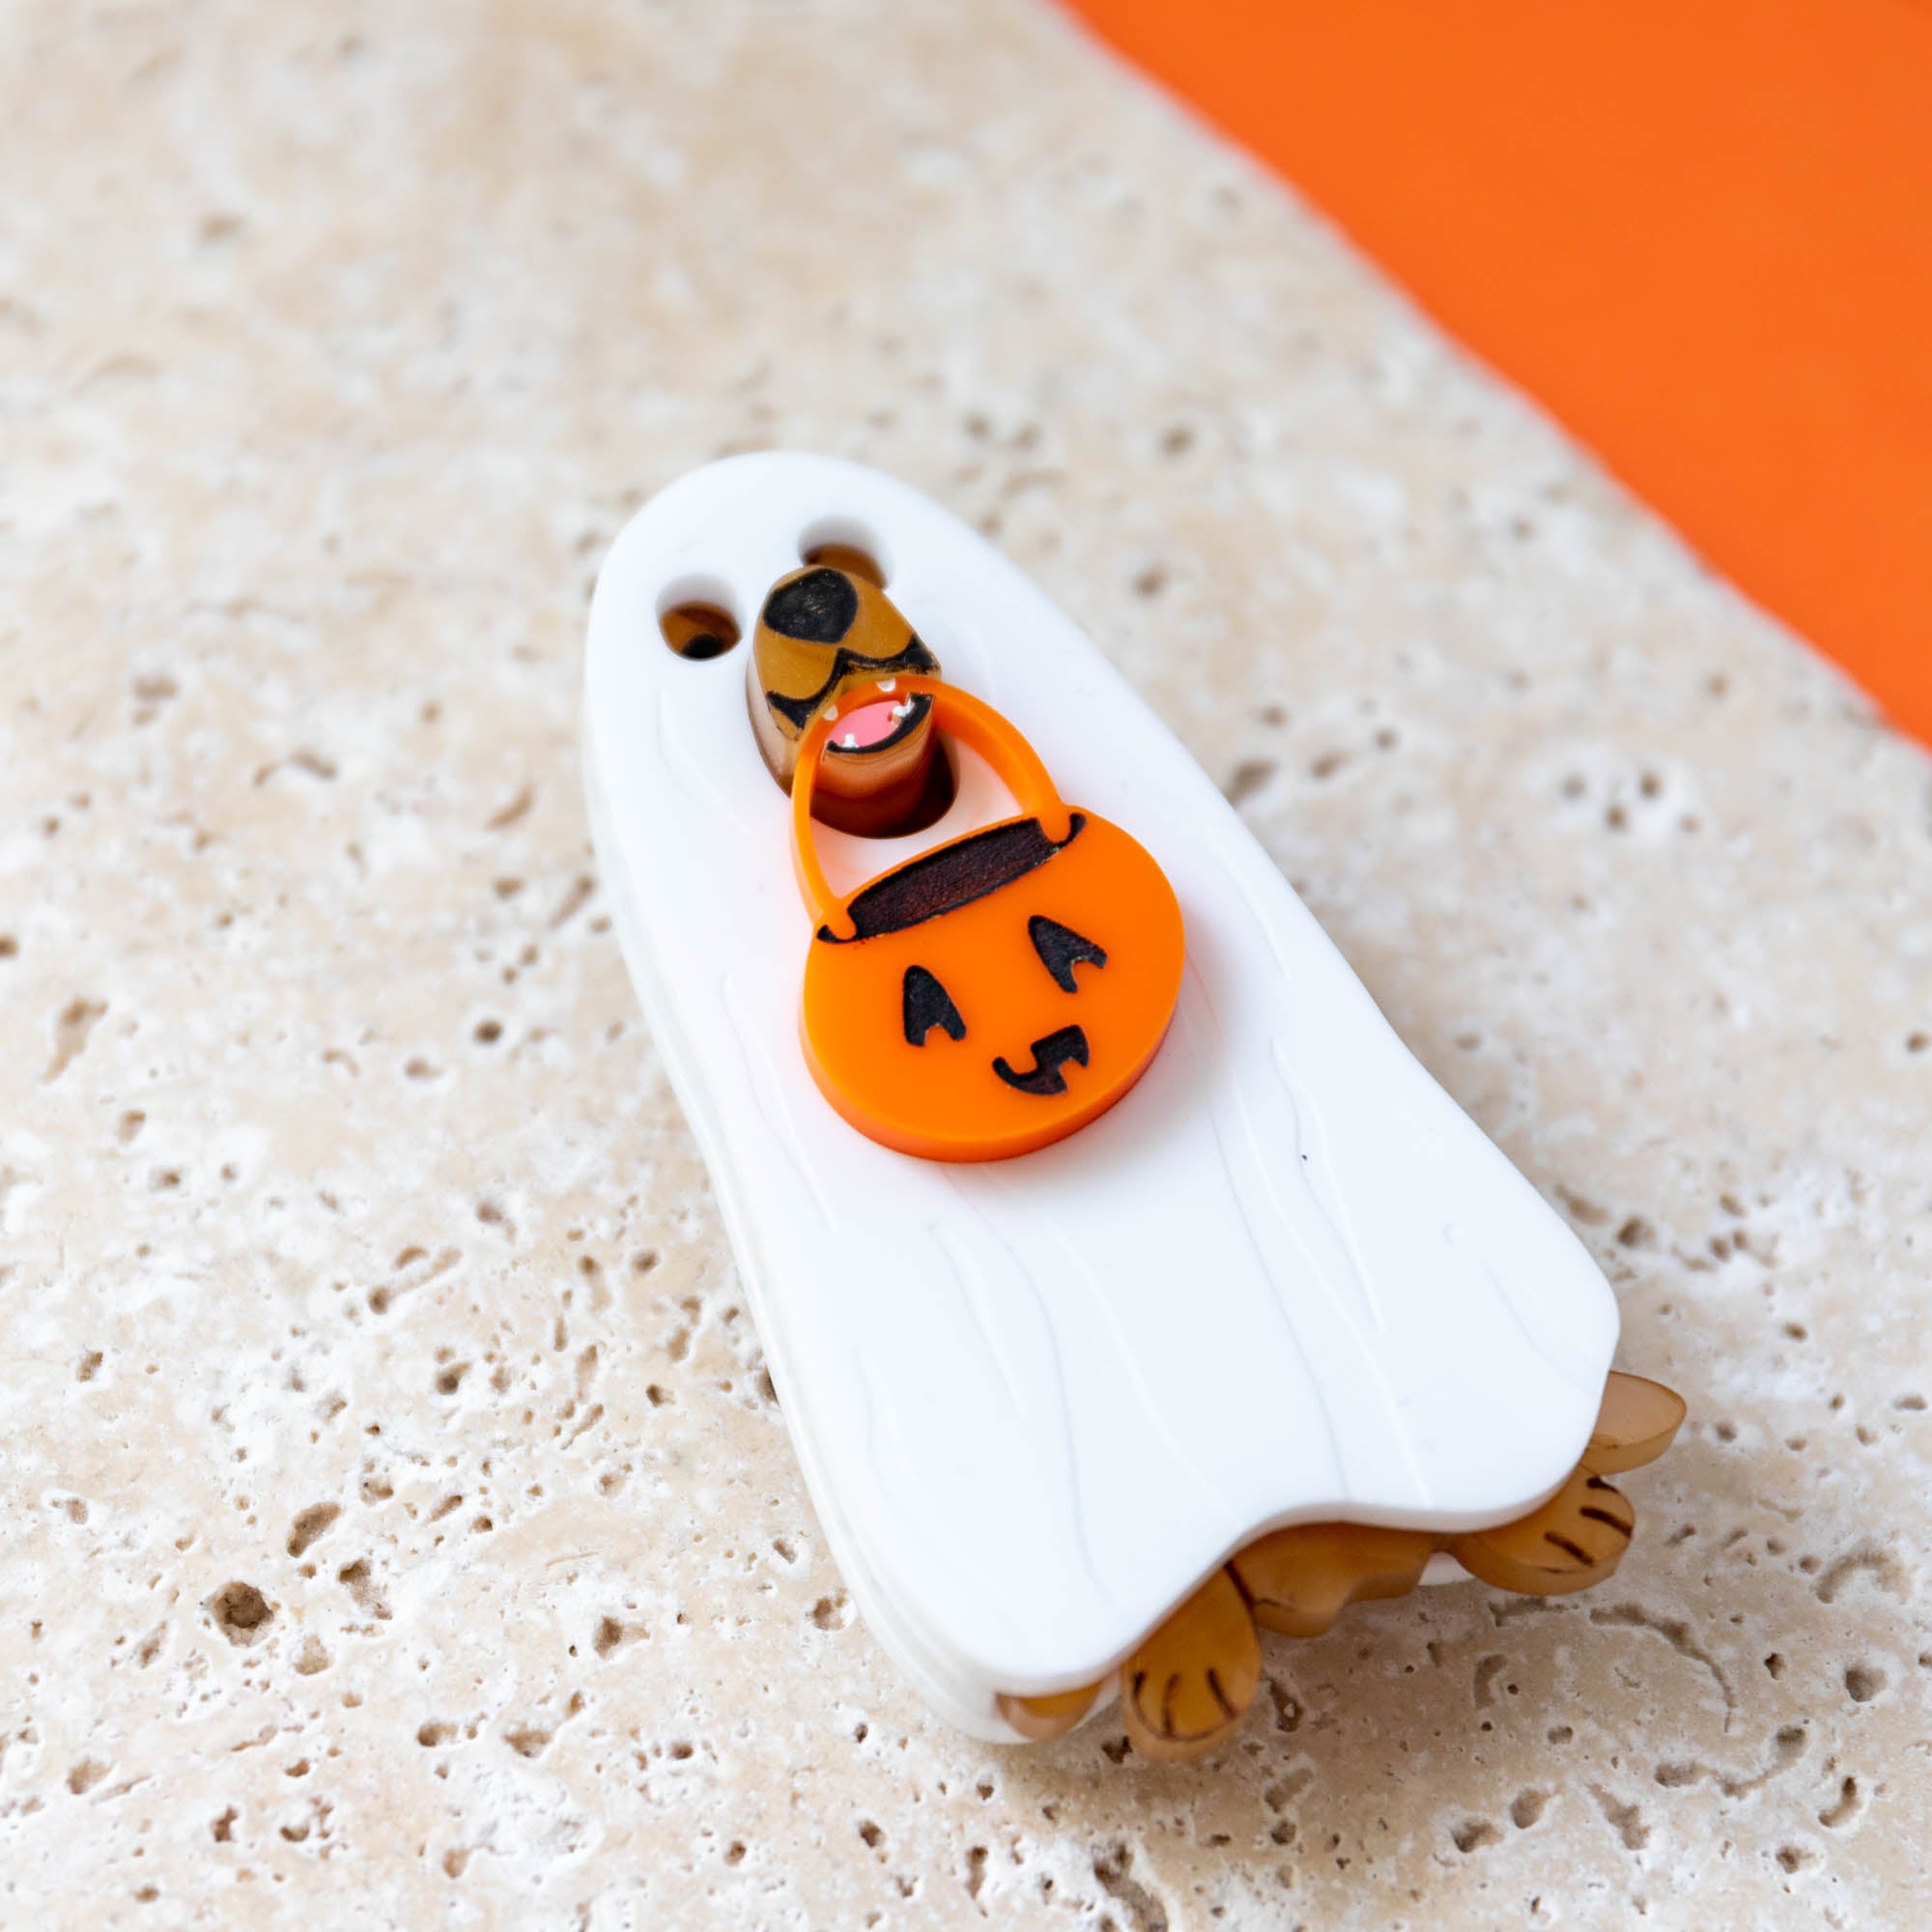 goldeb retriever in a ghost costume brooch